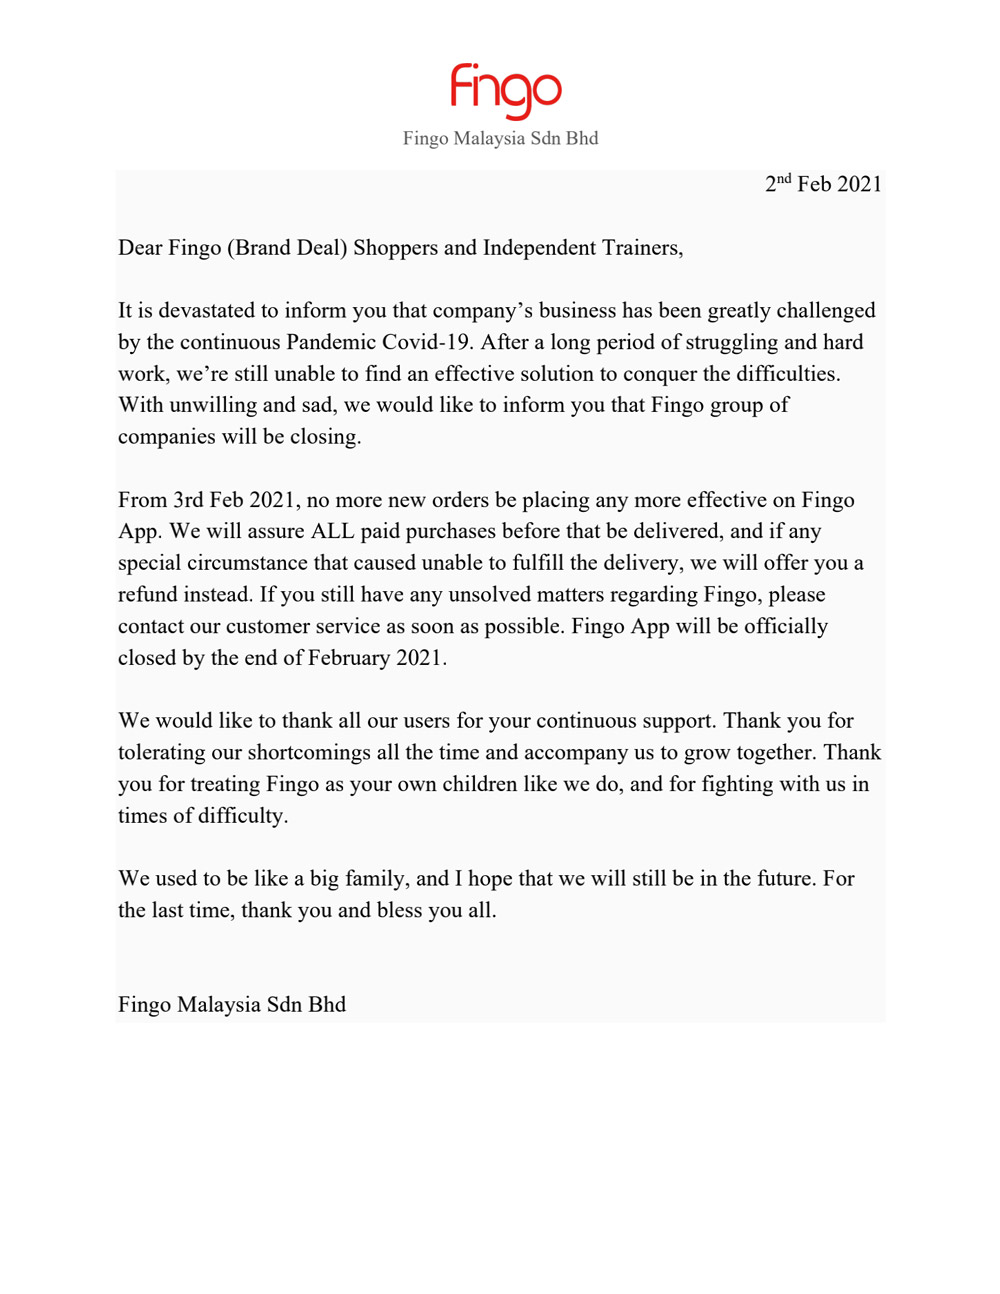 Fingo Malaysia宣布倒闭